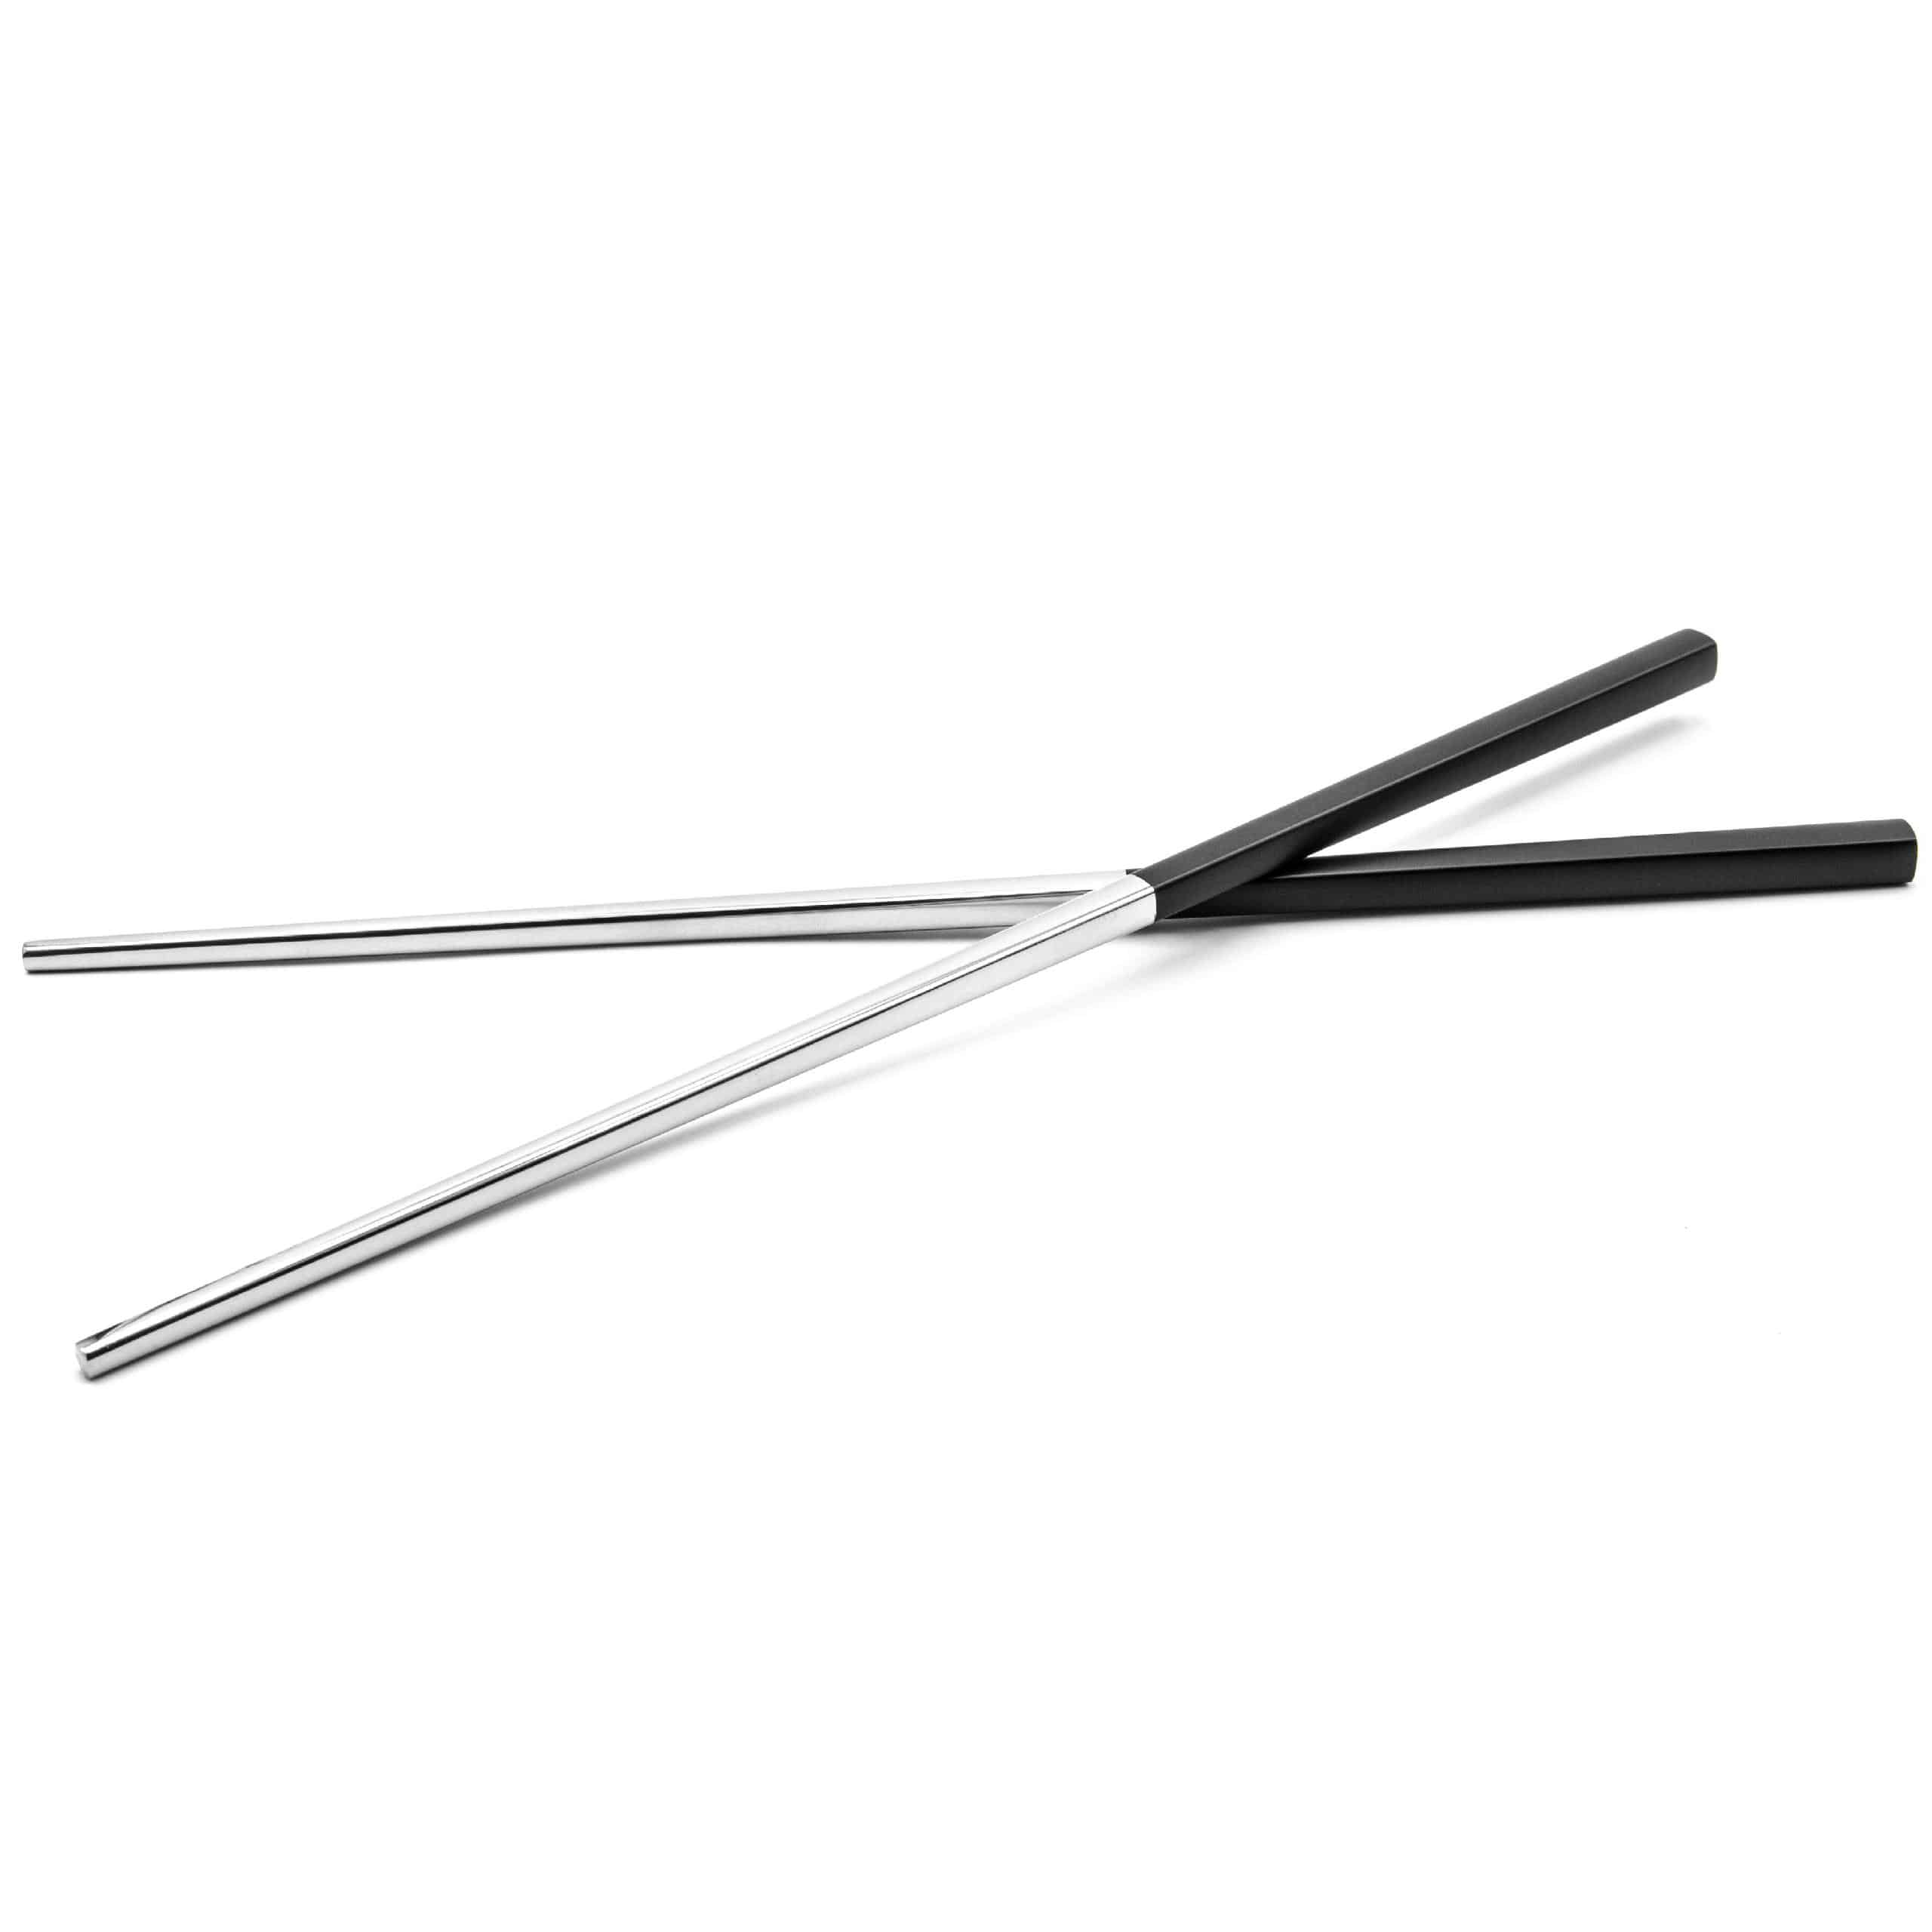 Chopstick Set (1 Pair) - Stainless Steel, black, silver, 23 cm long, Reusable